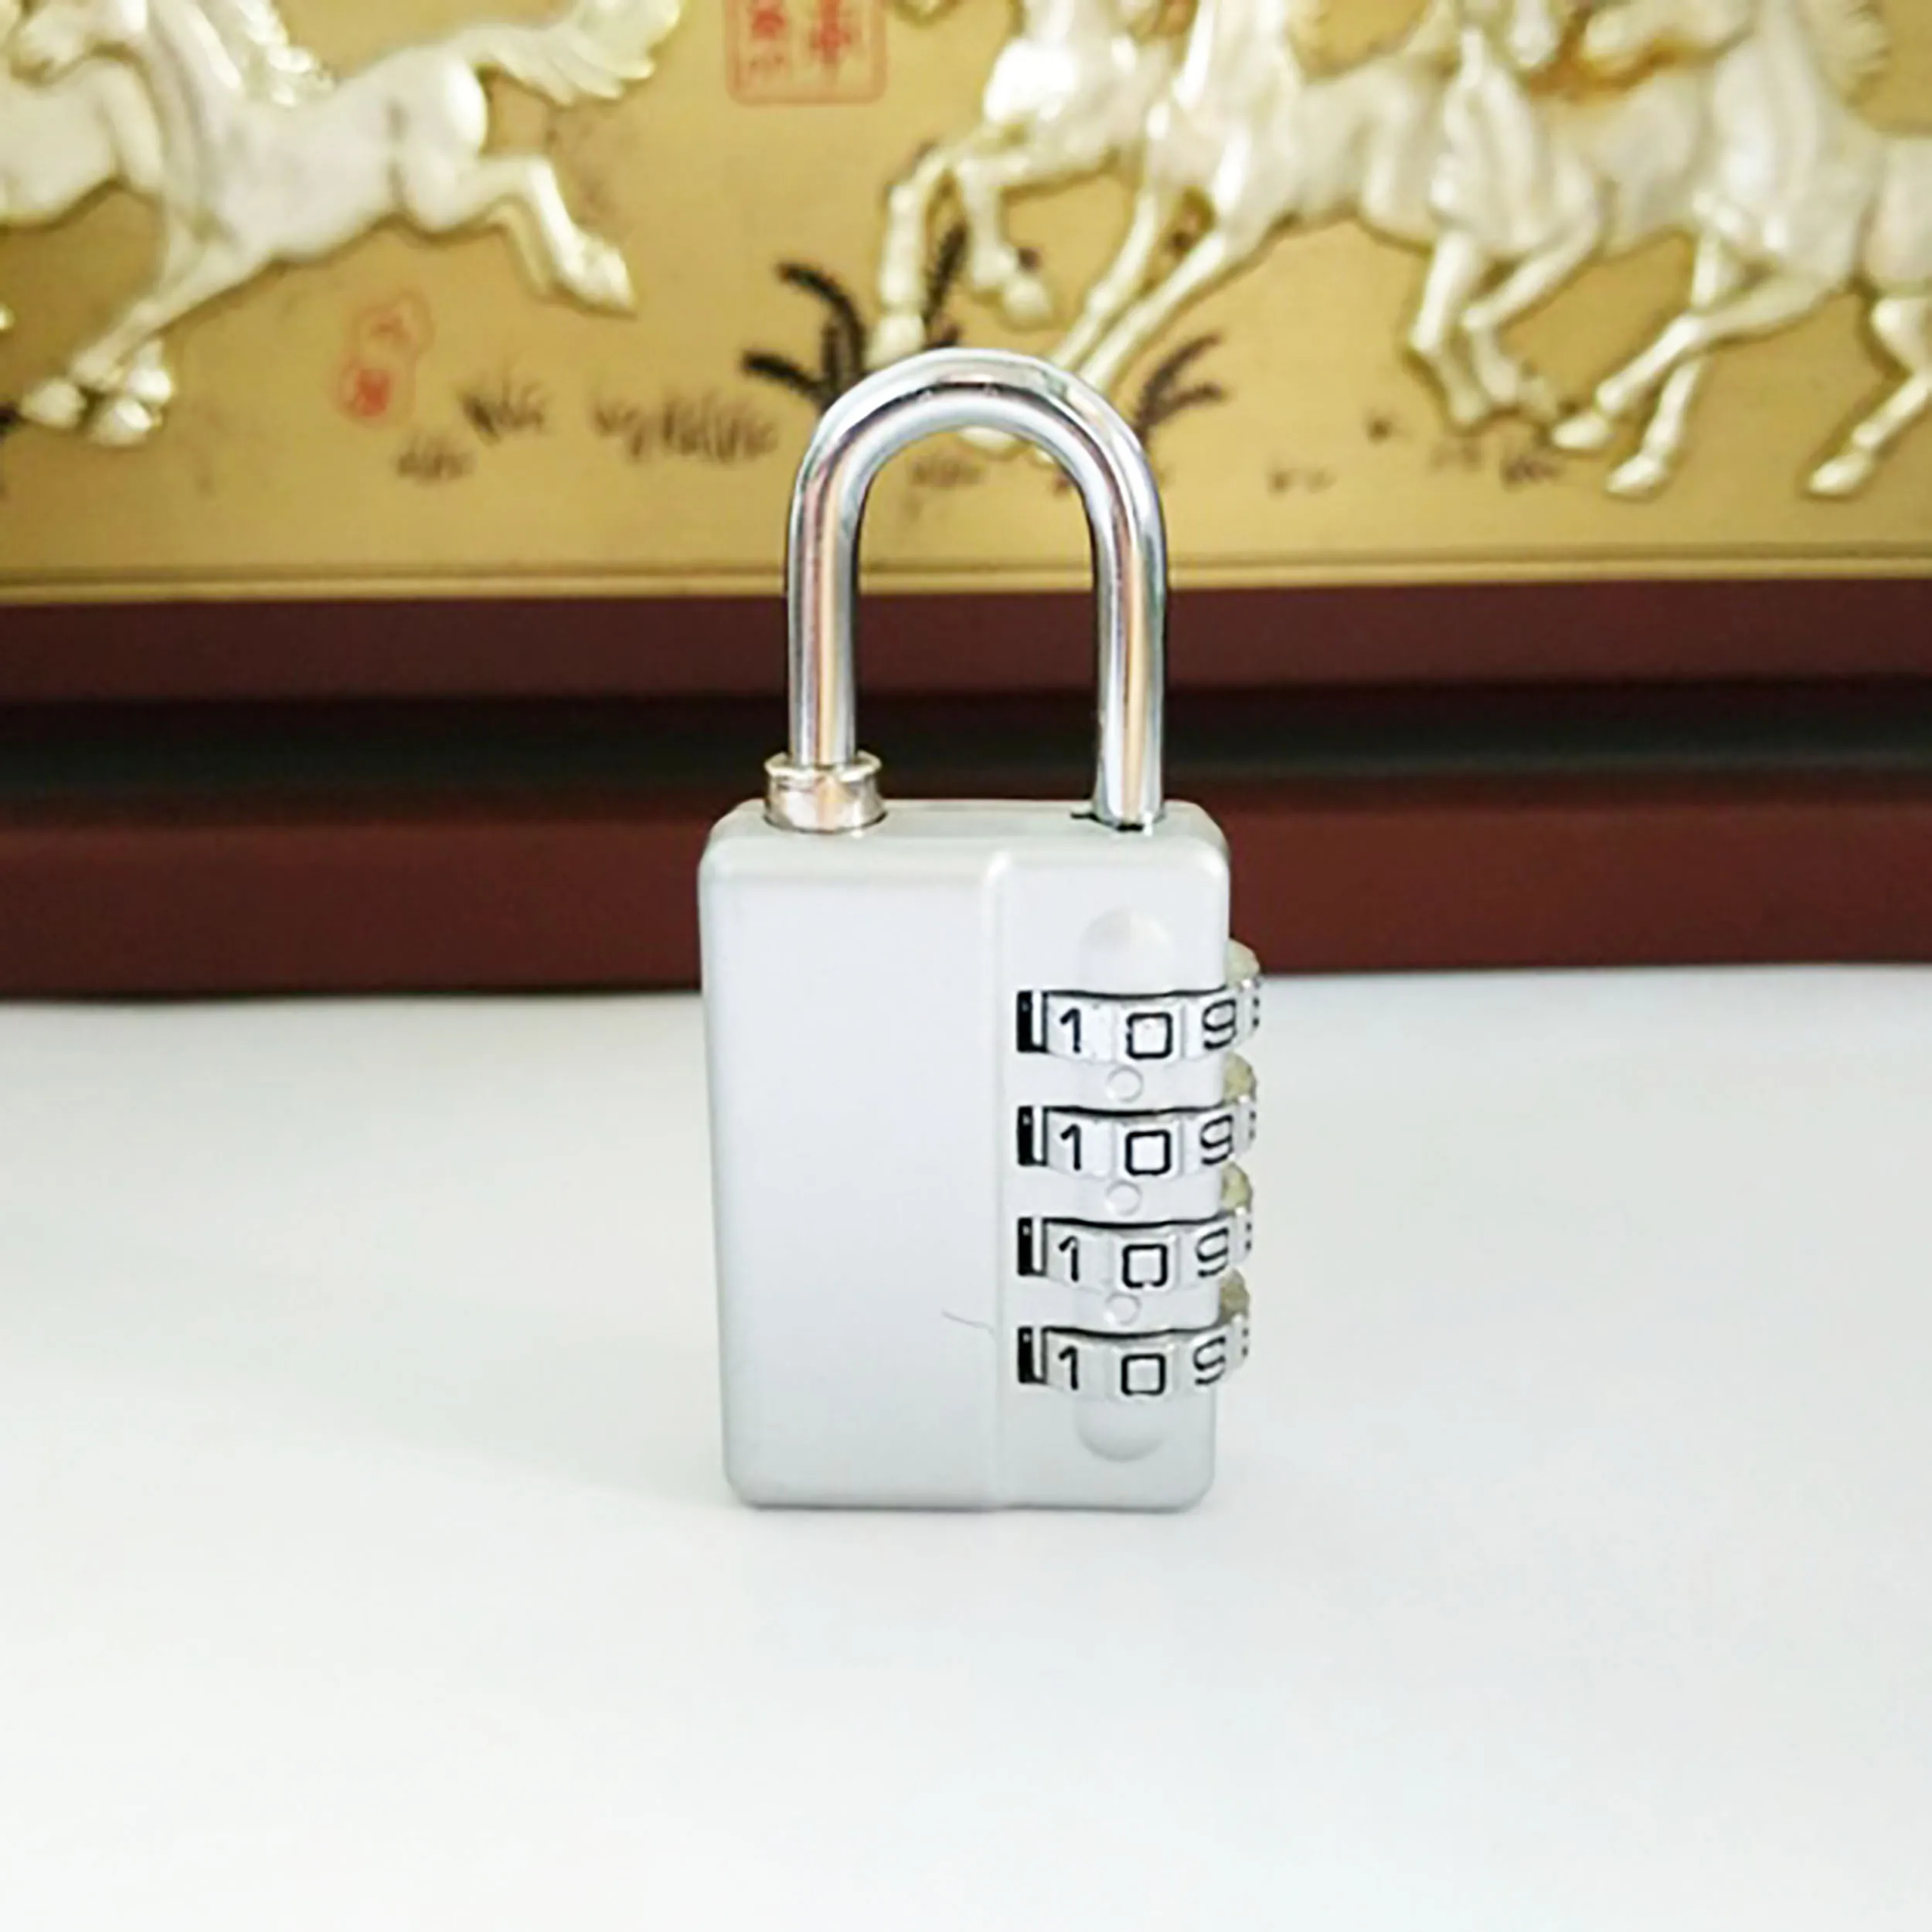 locker combination locks with master key